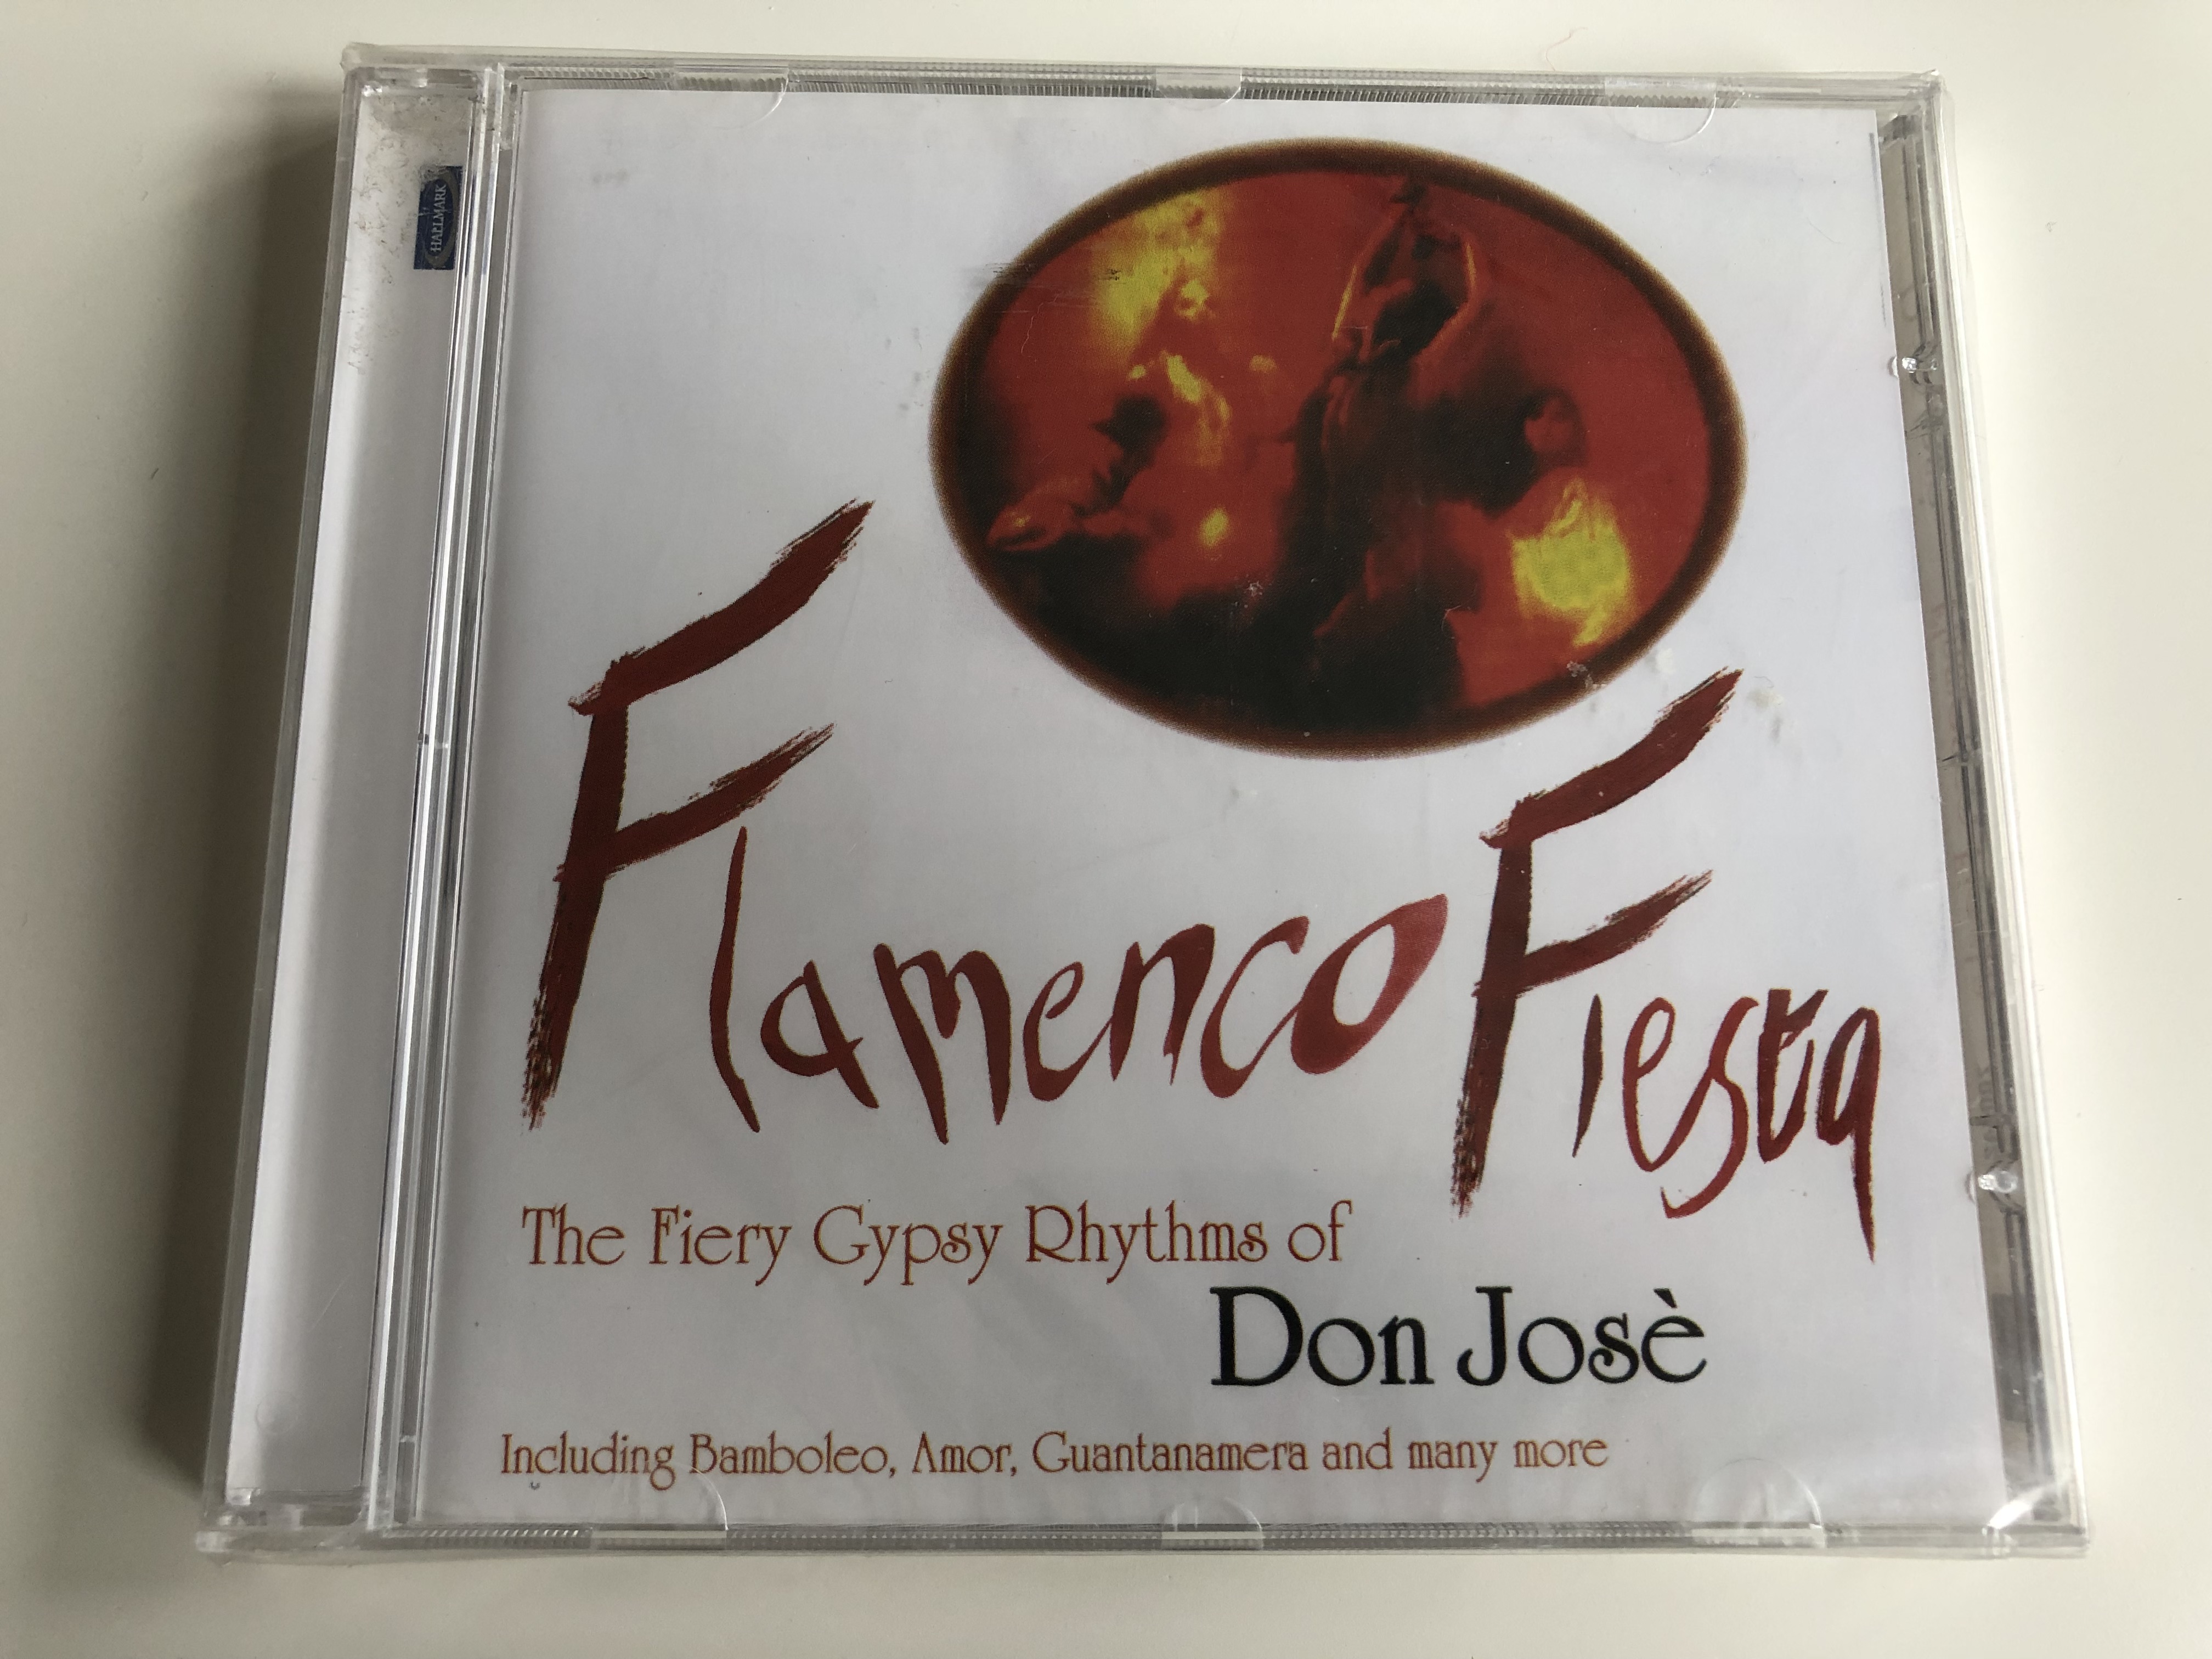 flamenco-fiesta-don-jose-img-15261.jpg